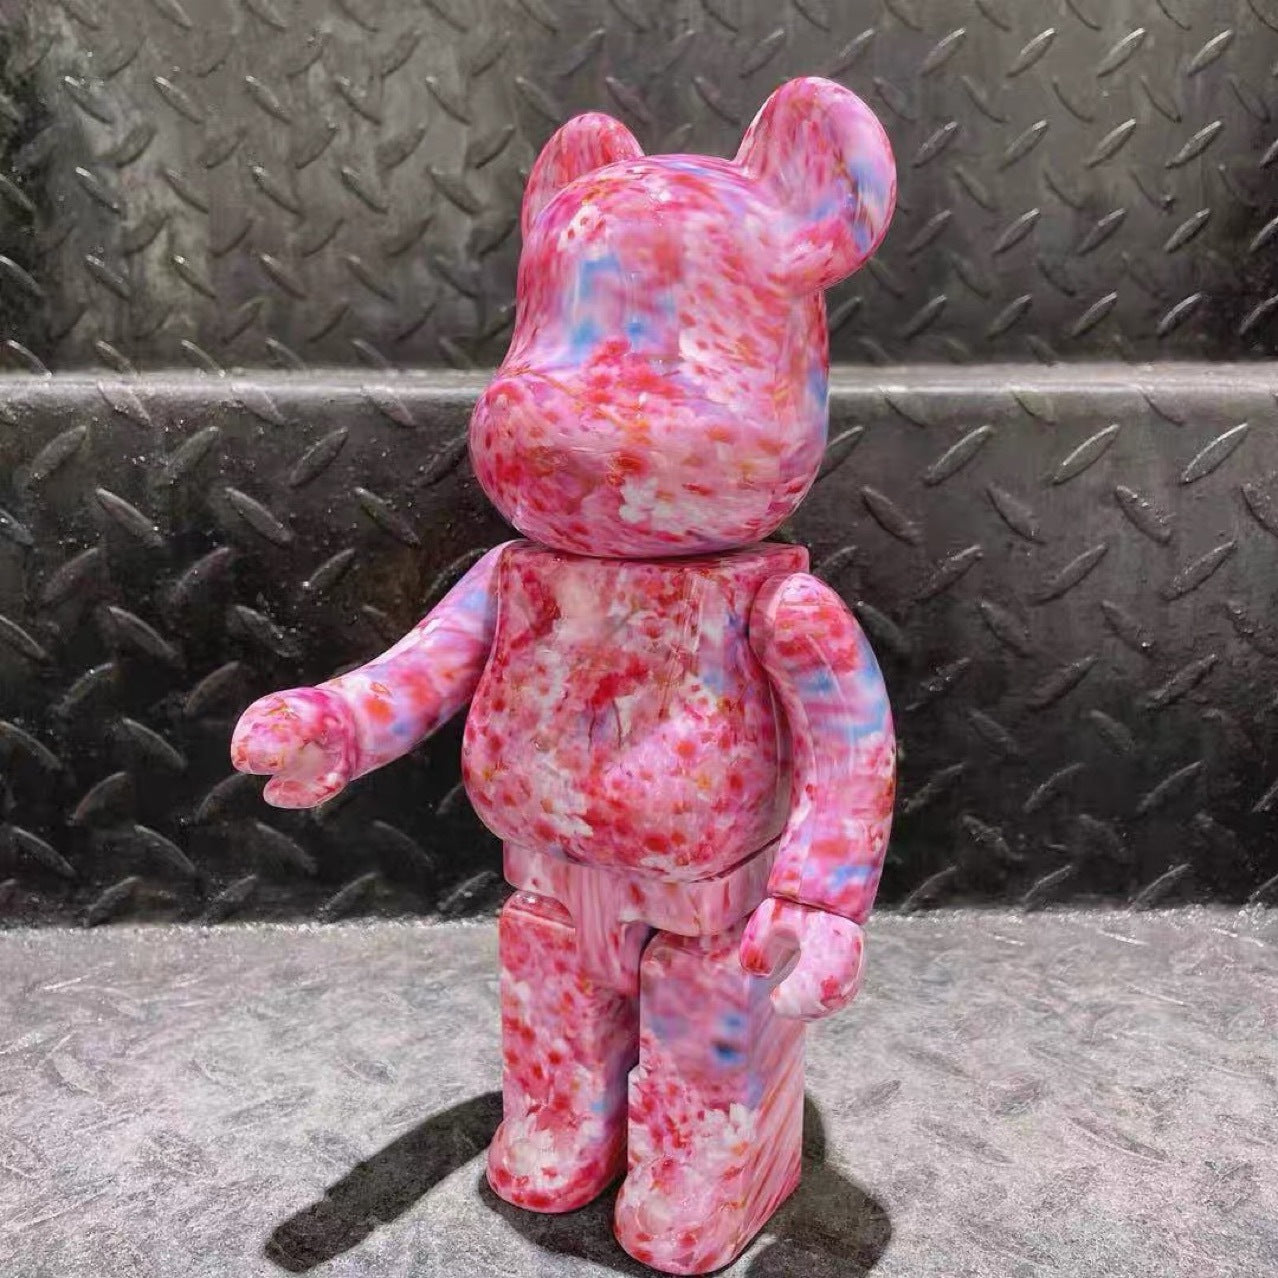 Sukura 28cm Bearbrick Toy Valentine's Day Gift